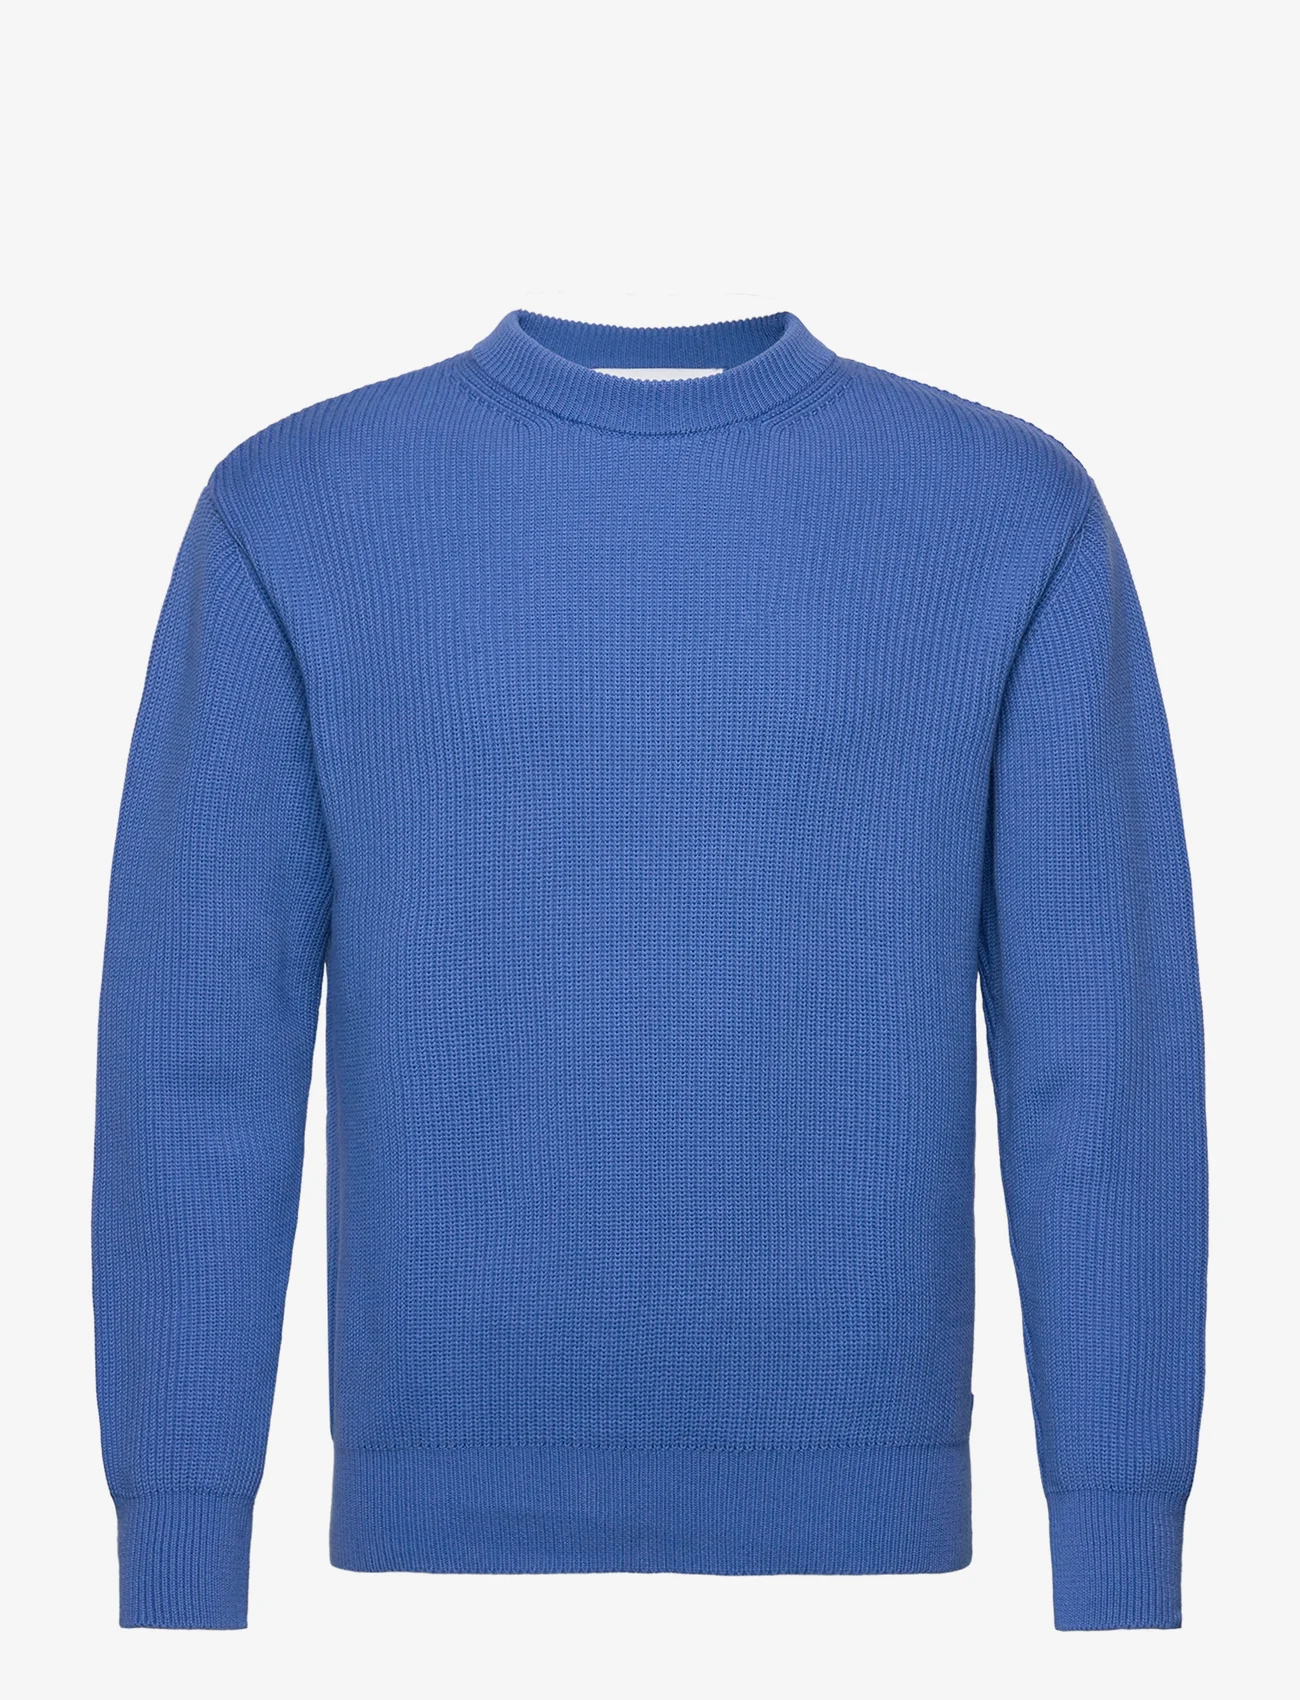 Garment Project - Round Neck Knit - Blue - megztinis su apvalios formos apykakle - blue - 0